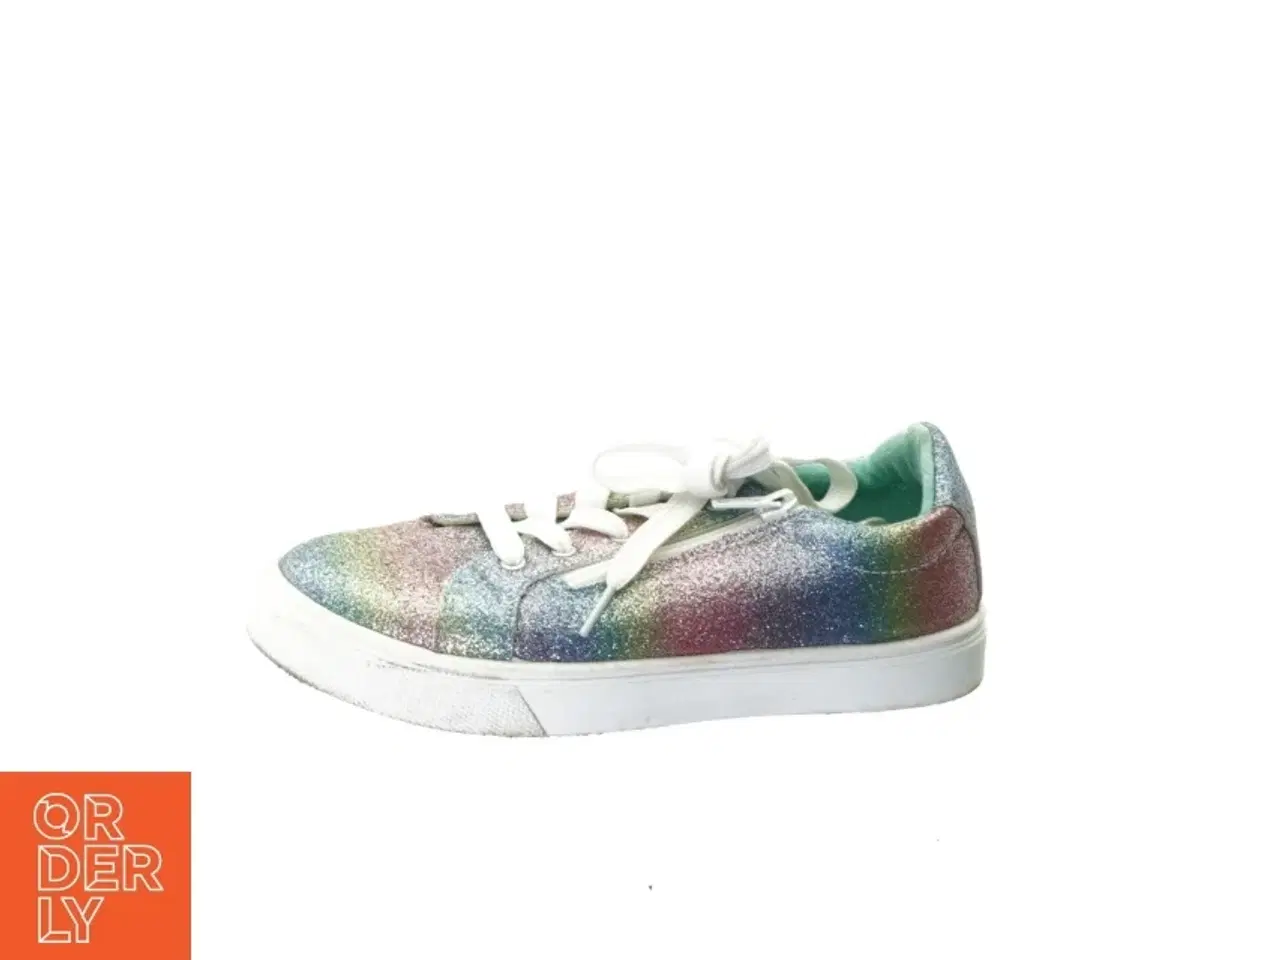 Billede 1 - Glimmer regnbue sko fra Zoey (str. 36)